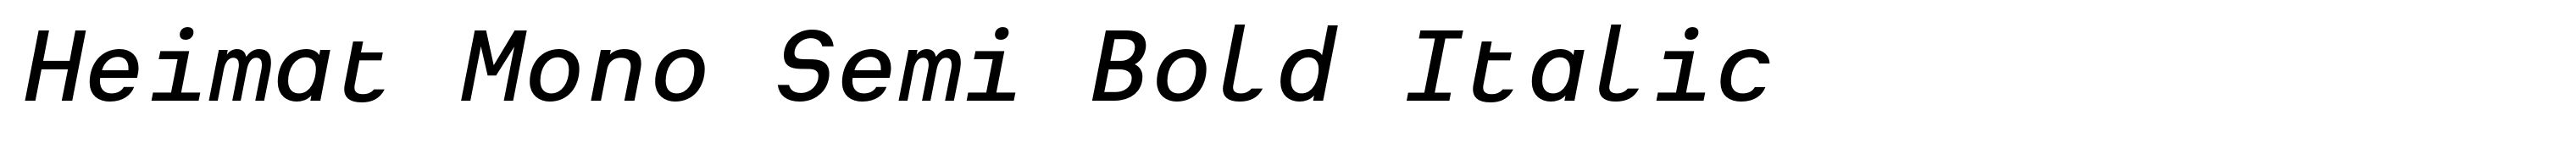 Heimat Mono Semi Bold Italic